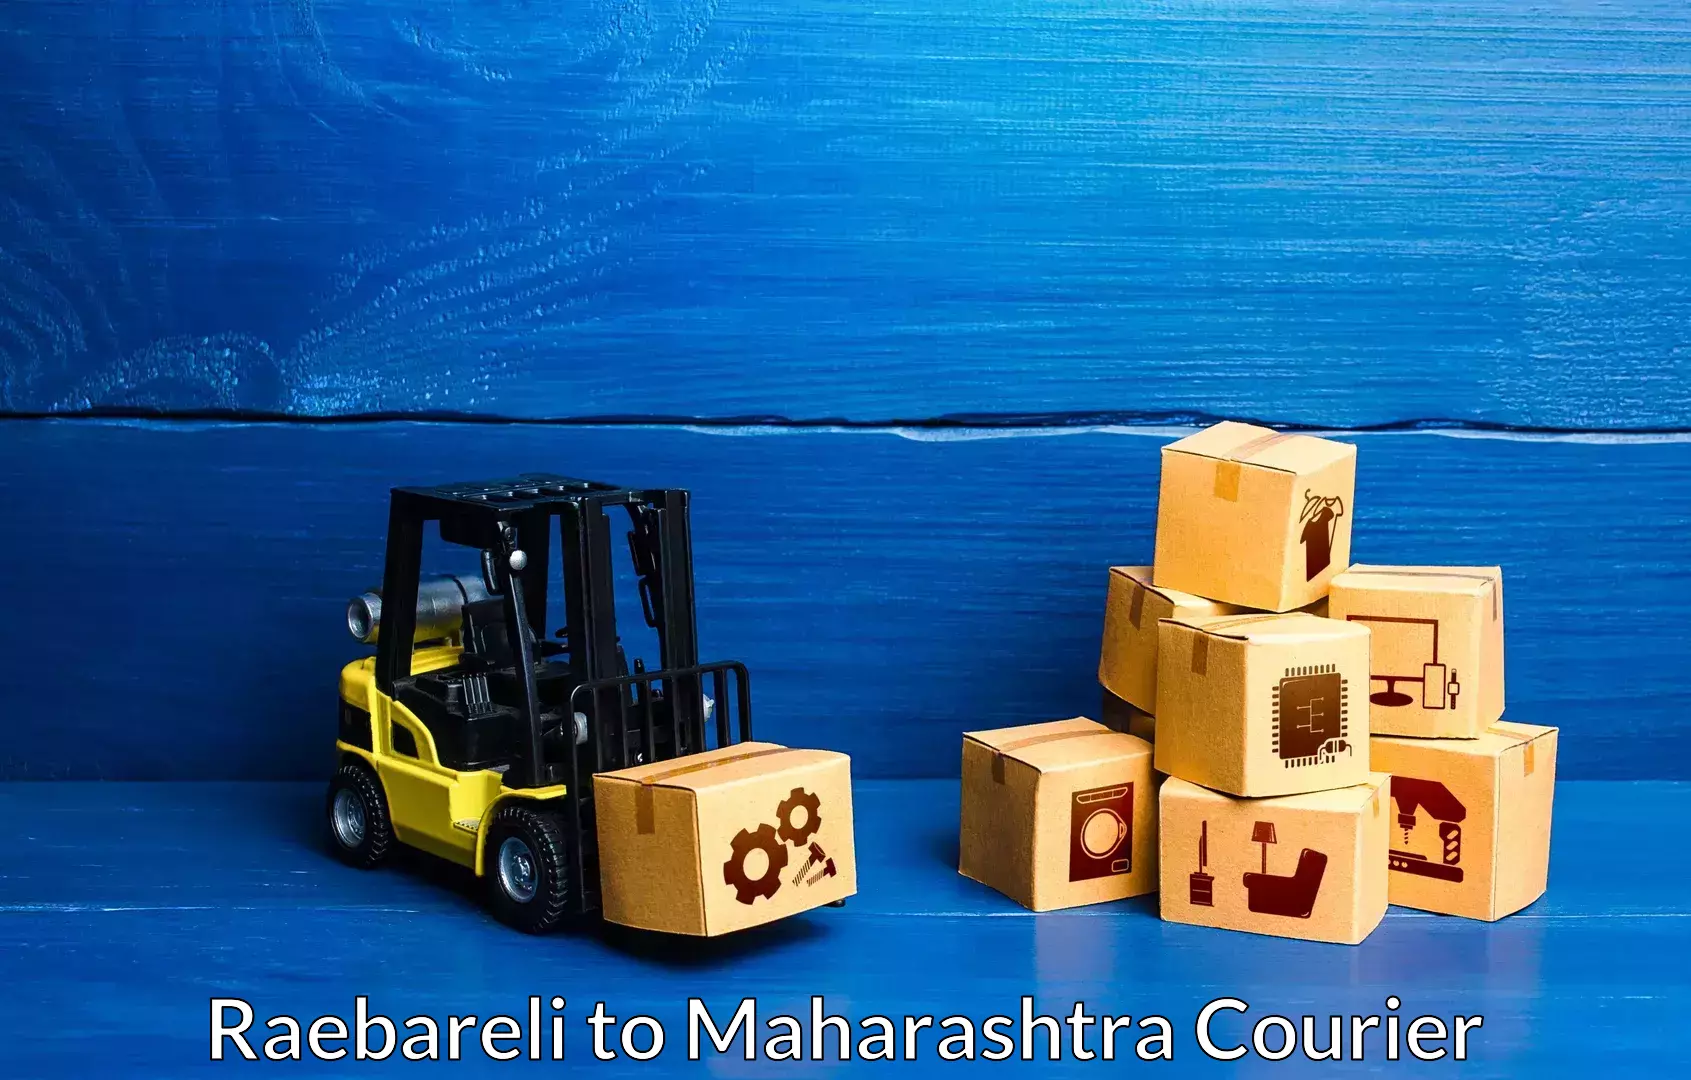 Professional moving company Raebareli to Dhule